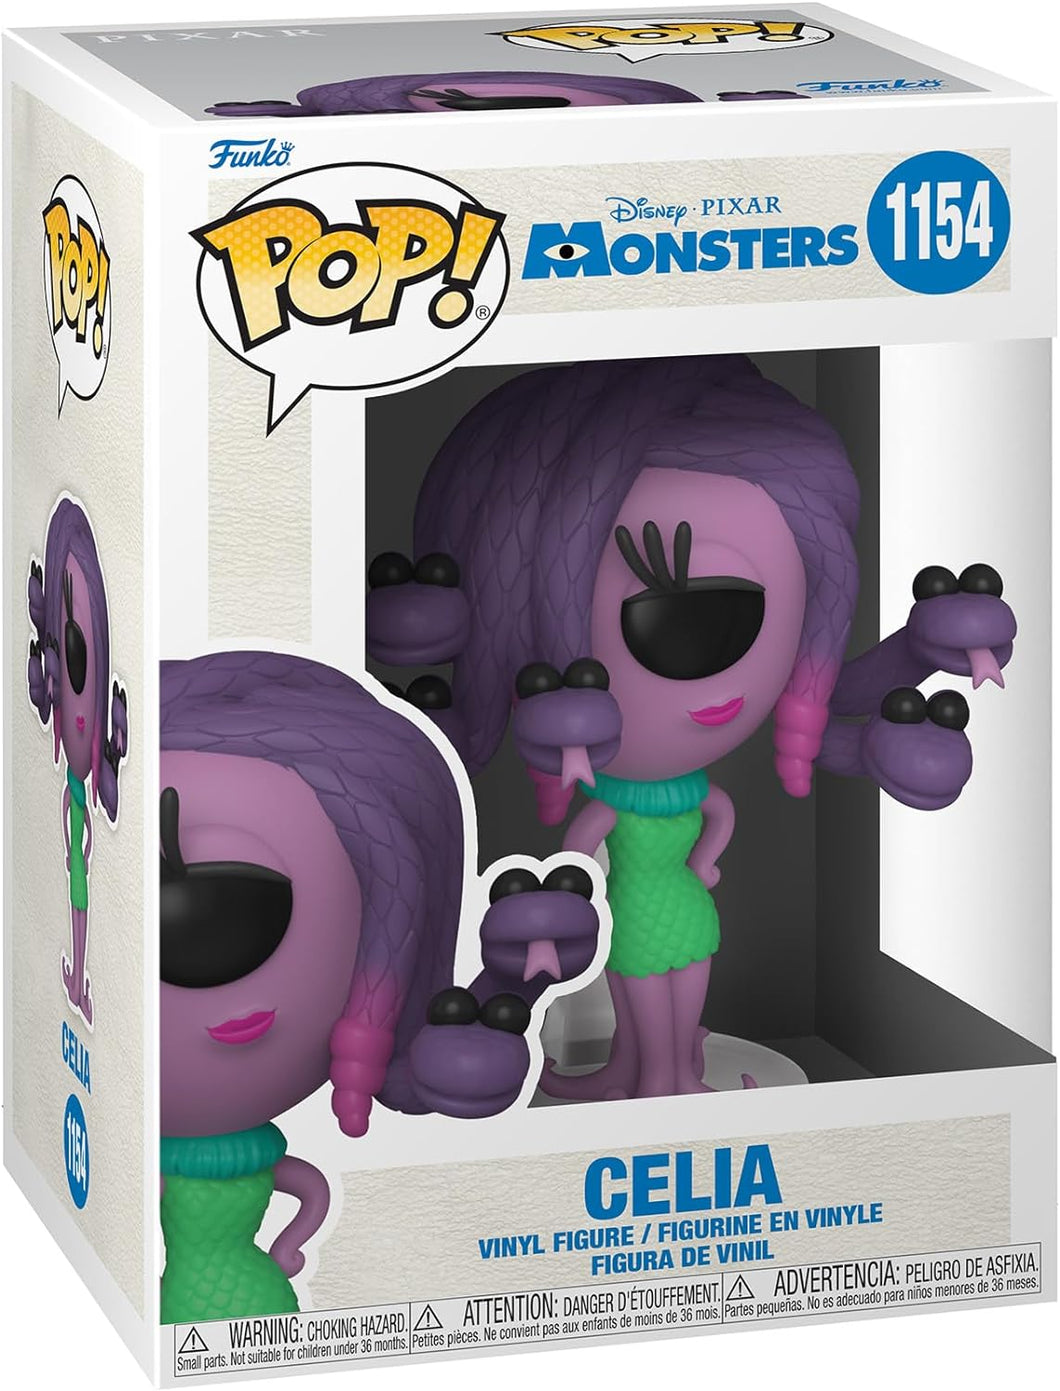 Funko Pop! Disney Pixar Monsters Celia #1154